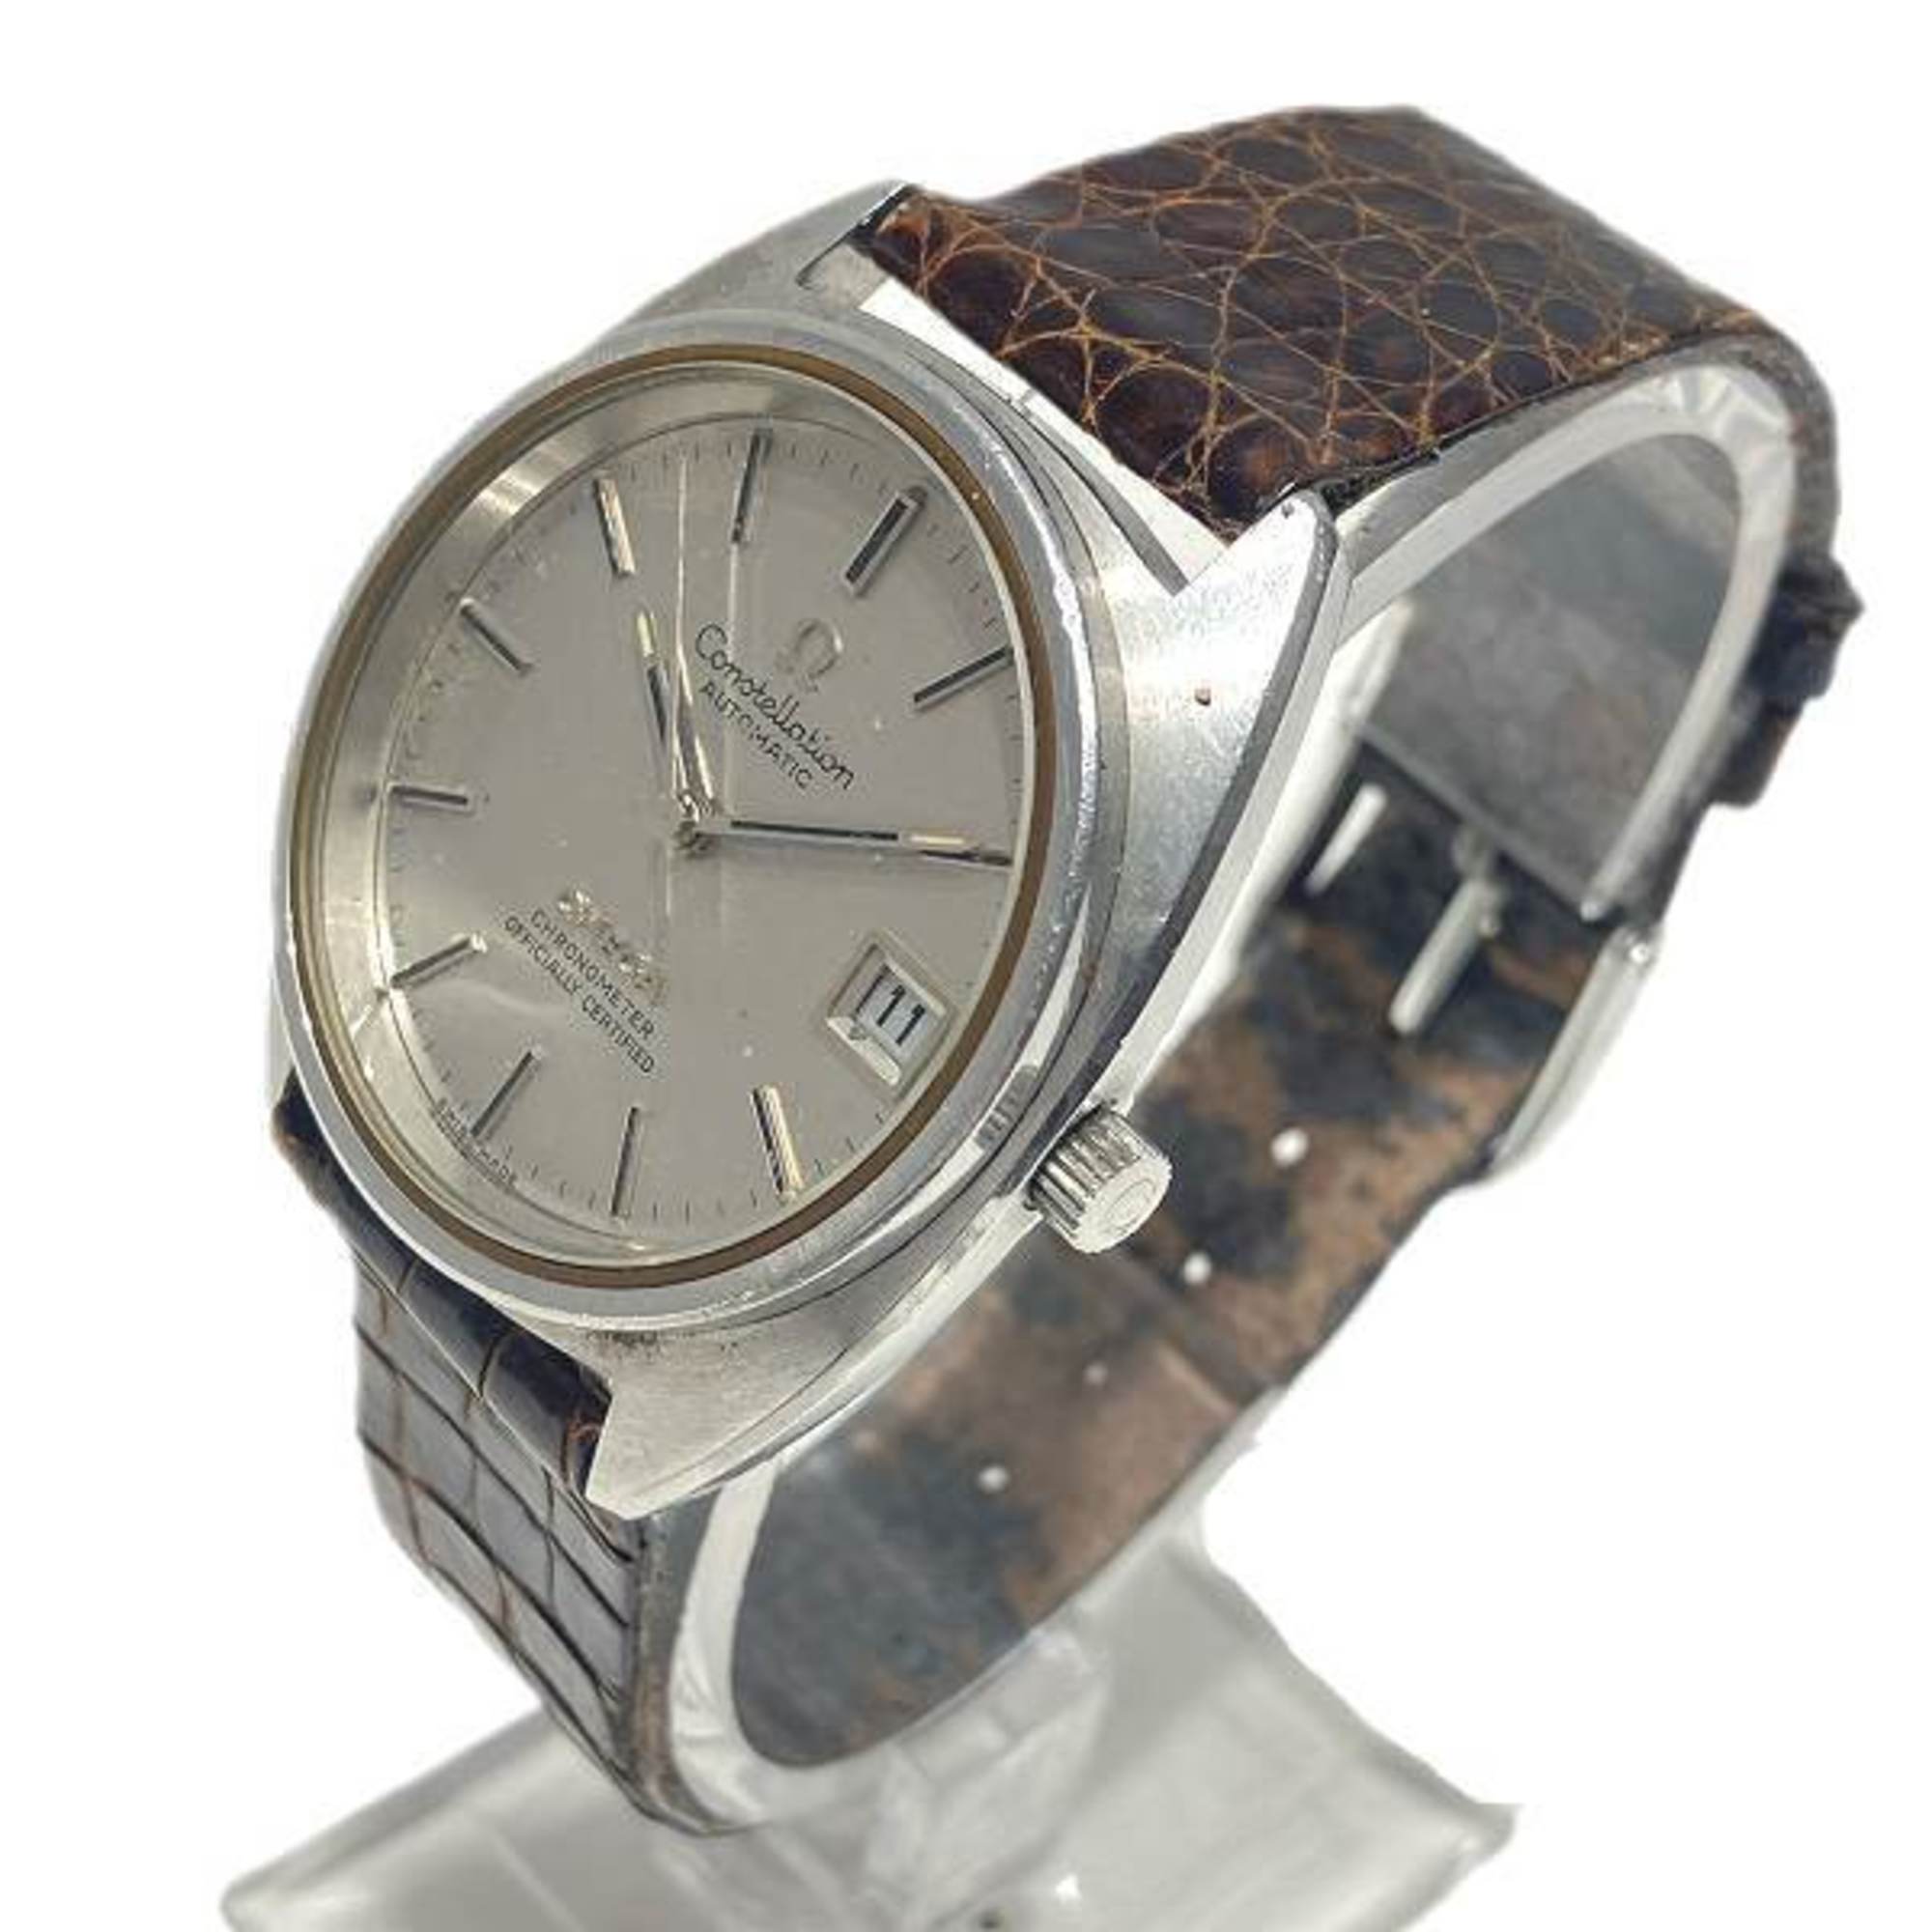 Omega Constellation 168.0056 Automatic Watch Men's Wristwatch